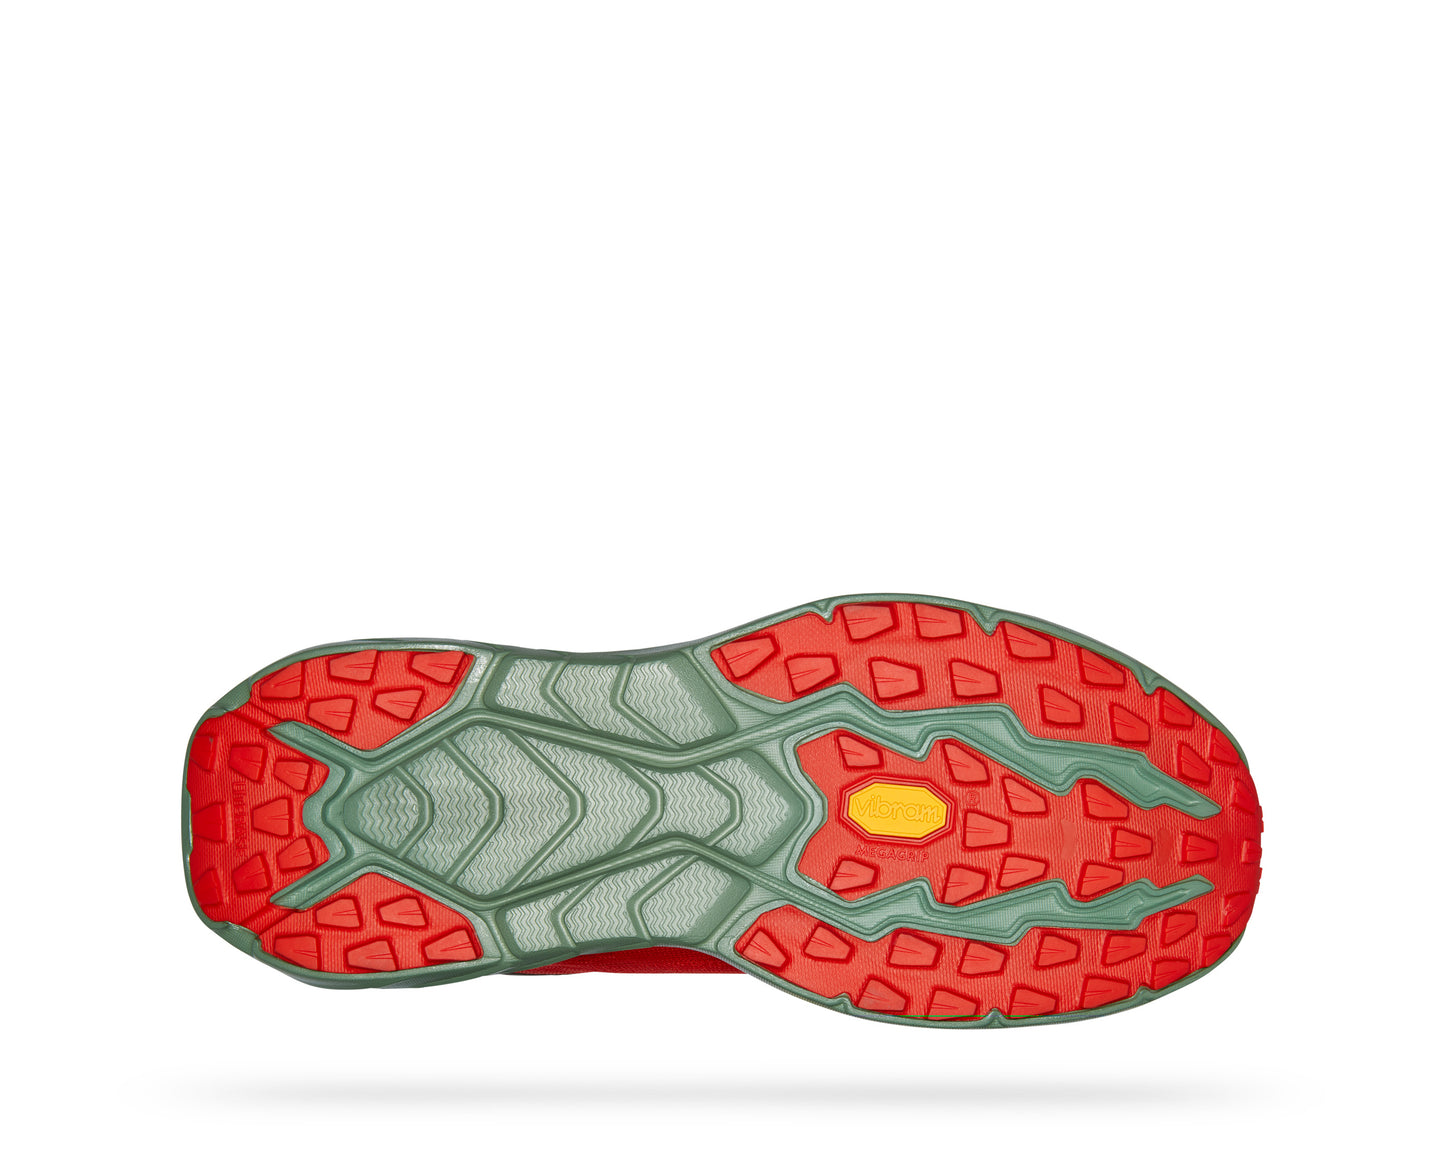 HOKA Zinal -  נעלי ספורט גברים הוקה זינאל בצבע